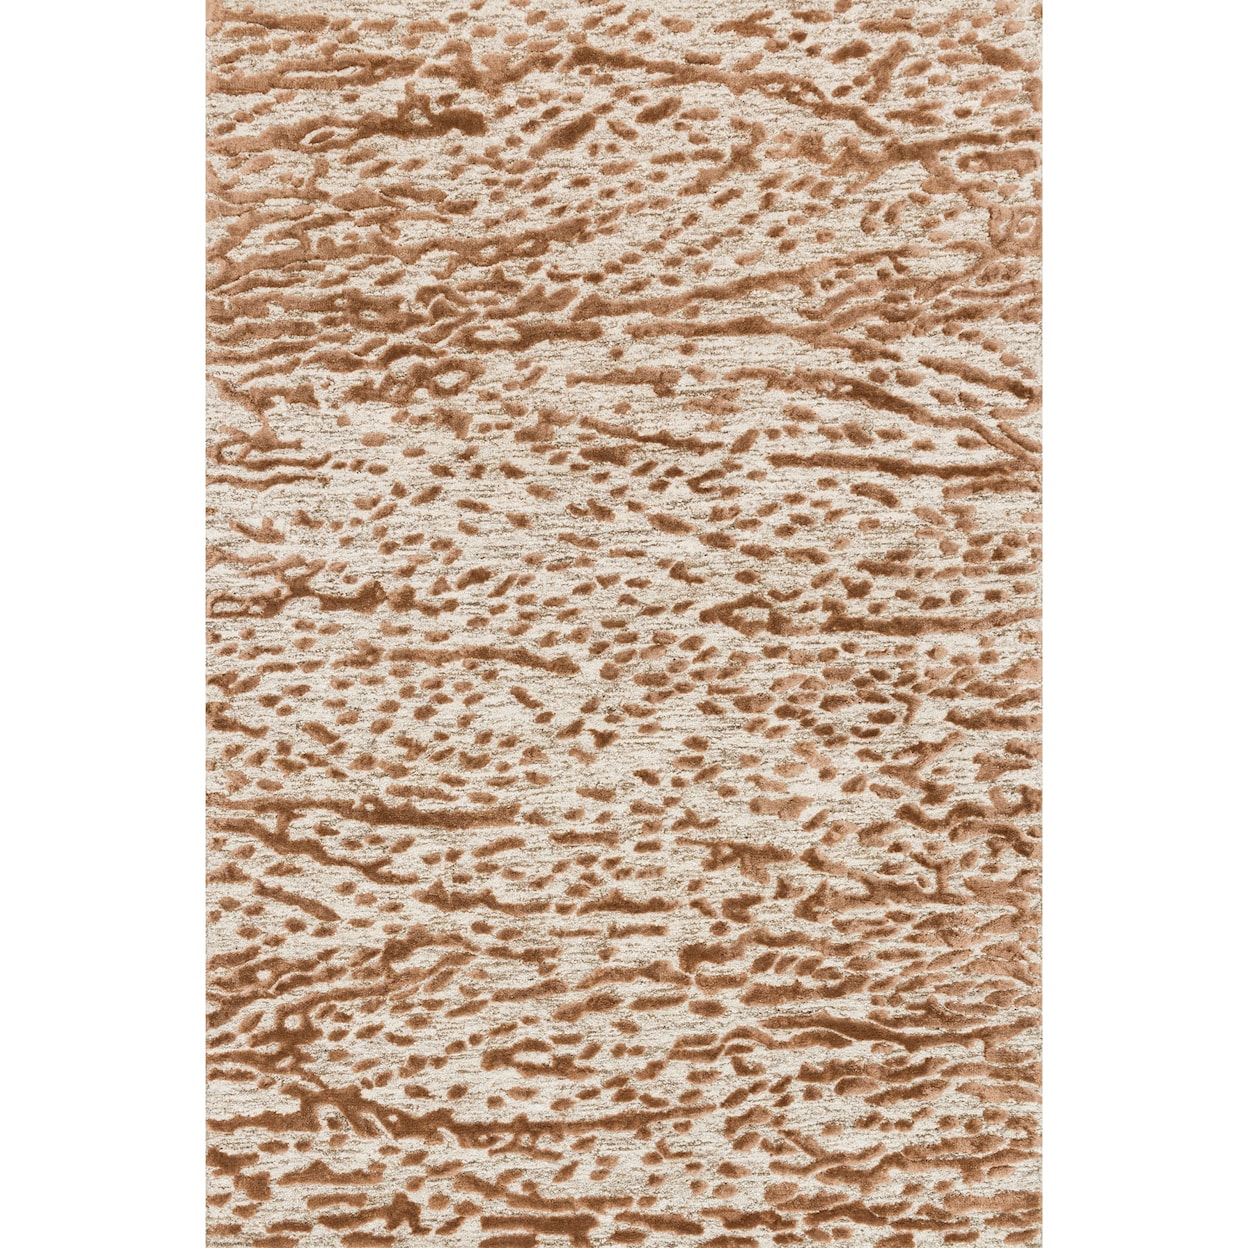 Reeds Rugs Juneau 1'6" x 1'6"  Oatmeal / Terracotta Rug